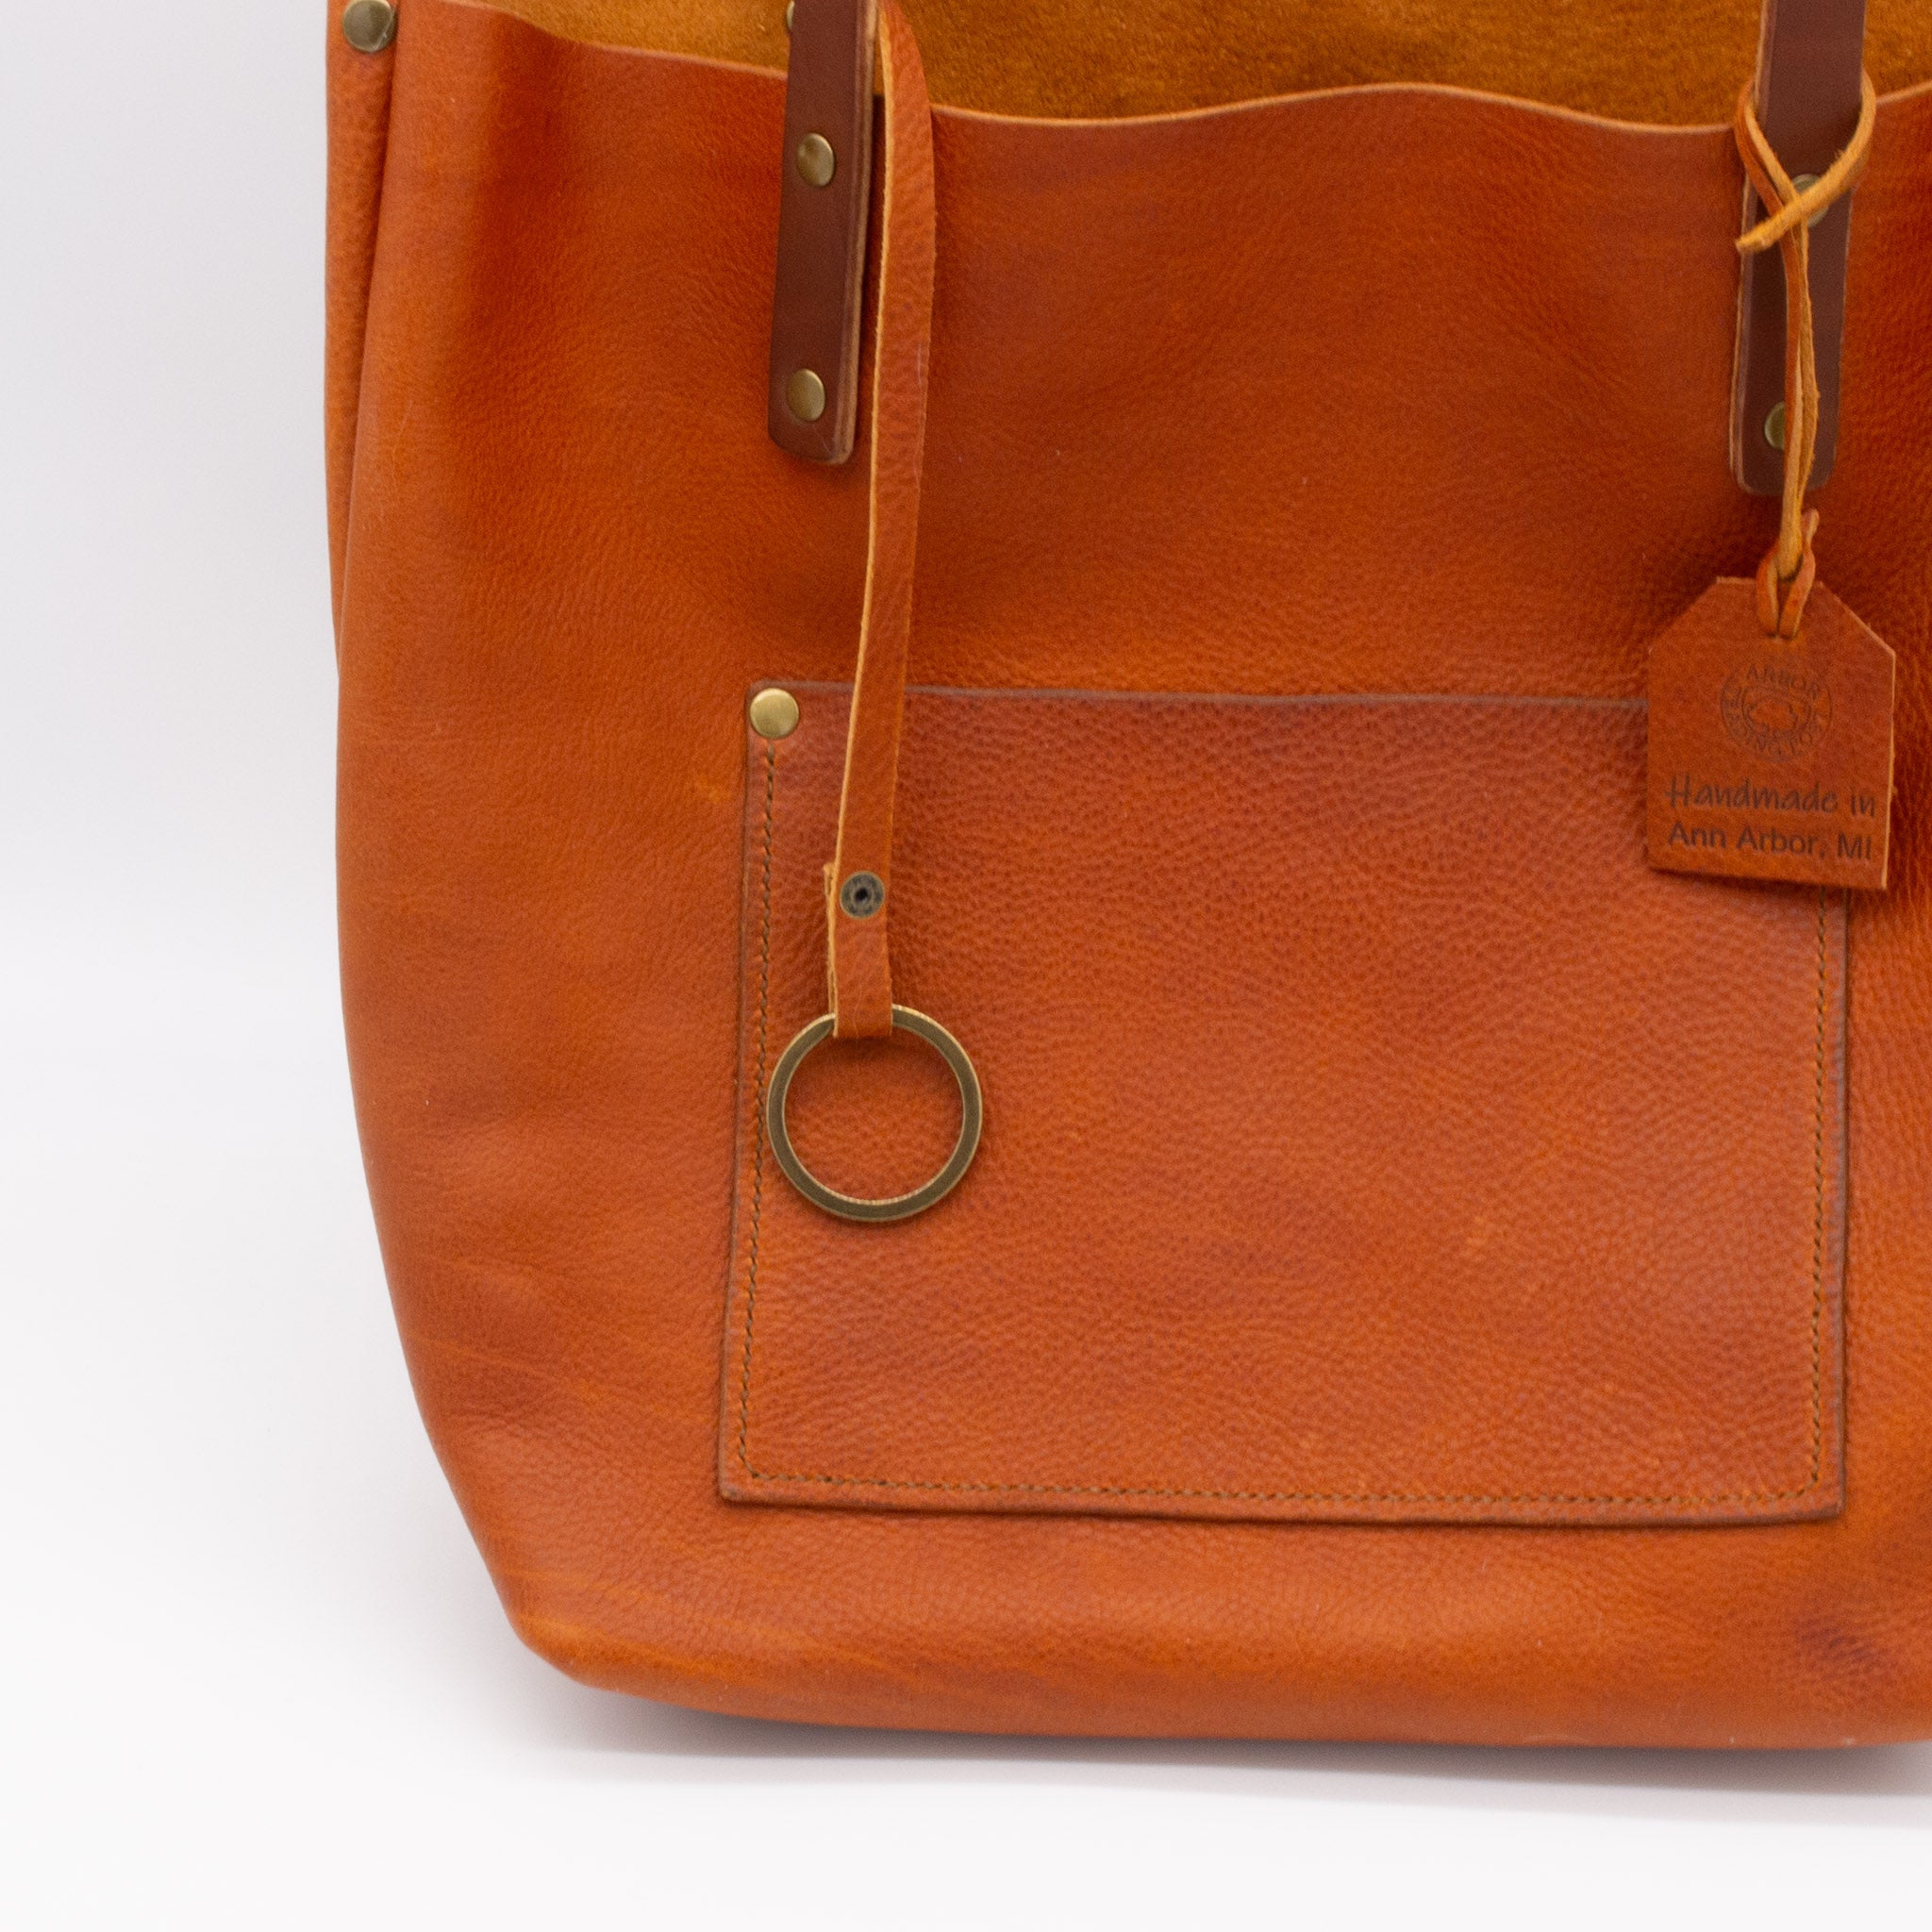 Medium Soft Pebbled Leather Everyday Tote Bag - Rustic Orange